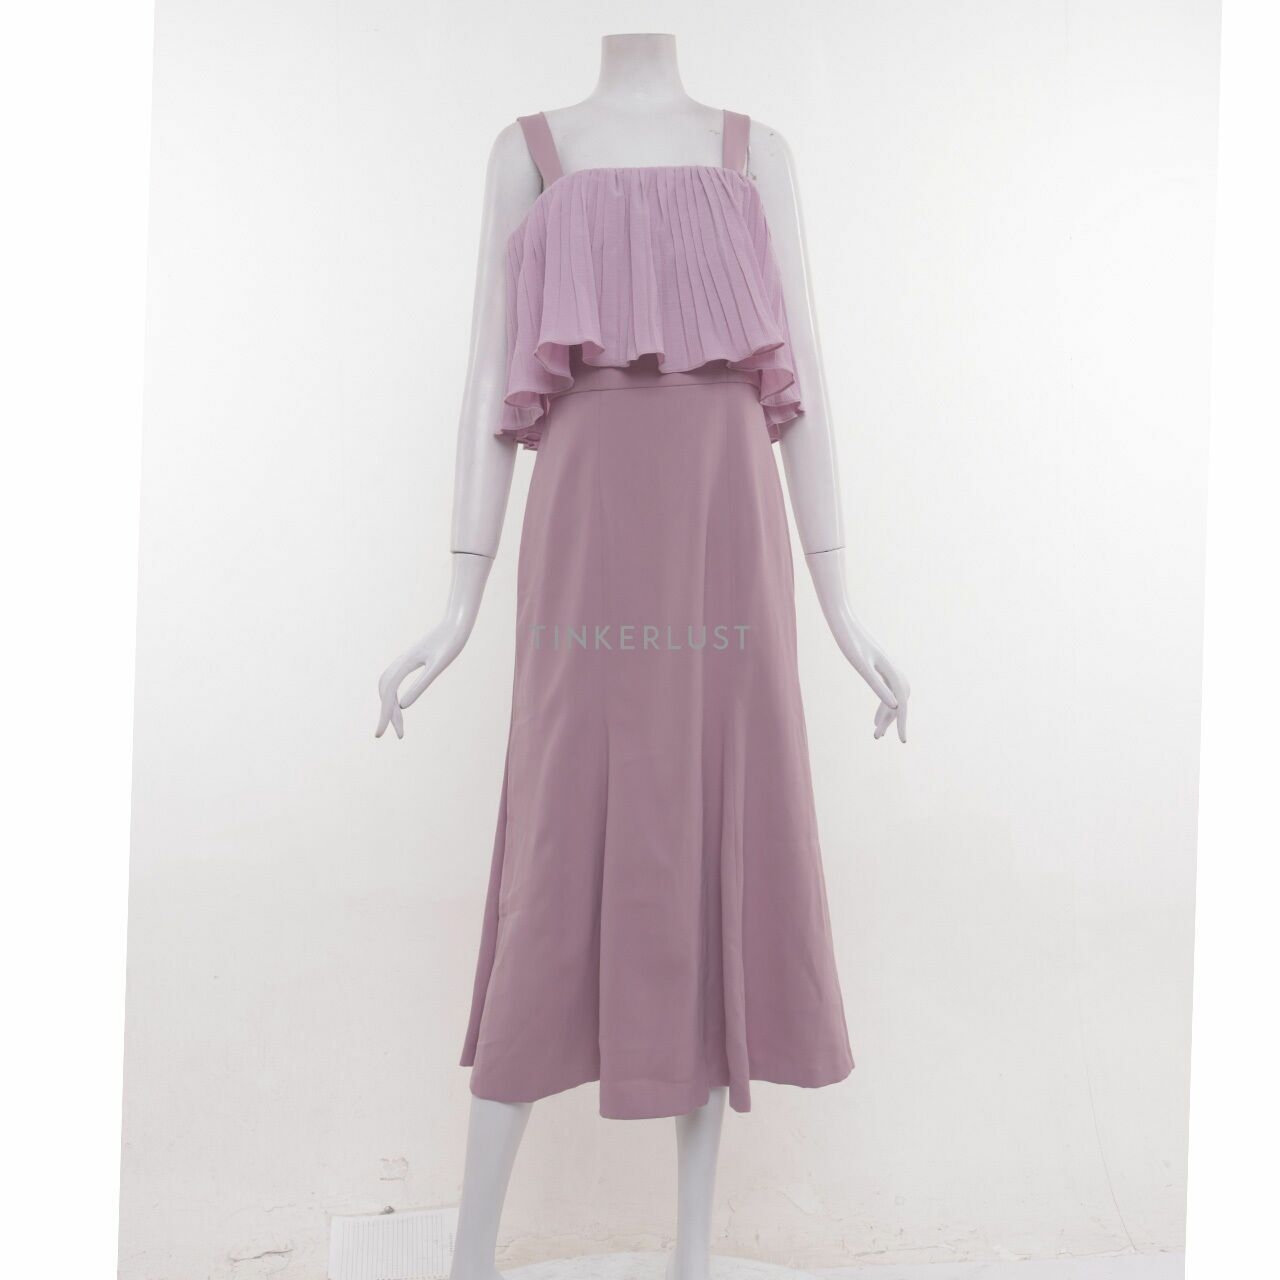 Poise24 Lilac & Dusty Mauve Midi Dress